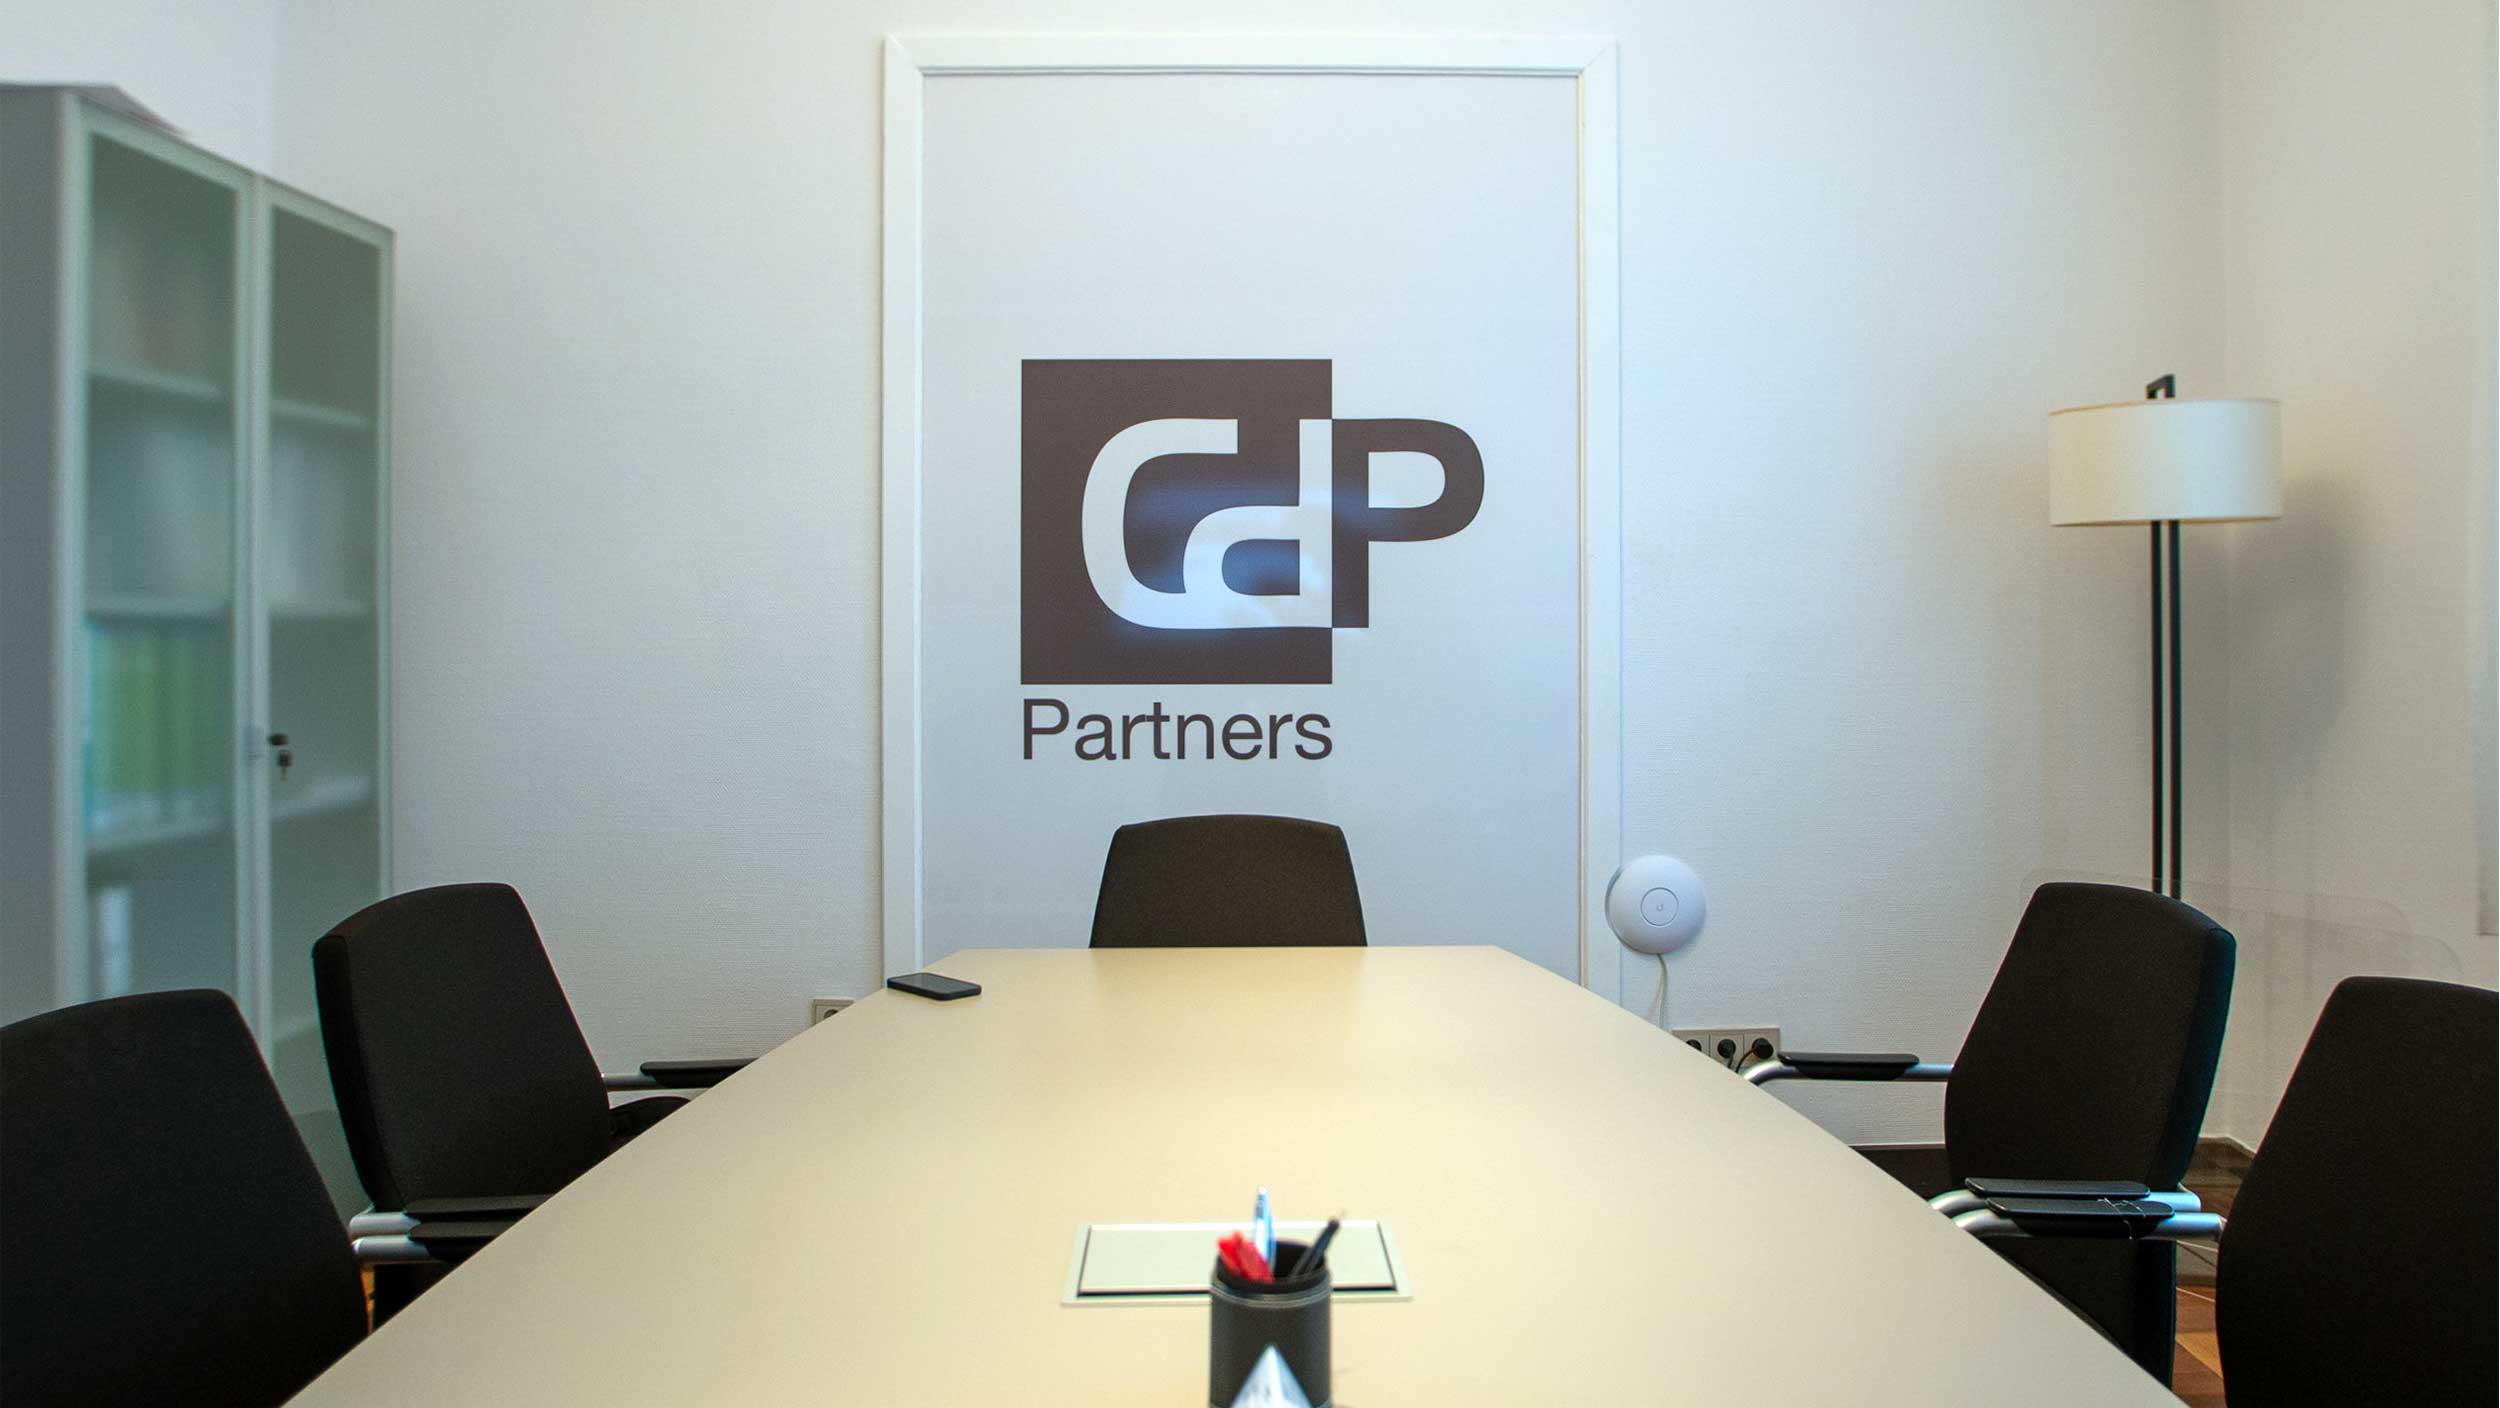 CDP Partners